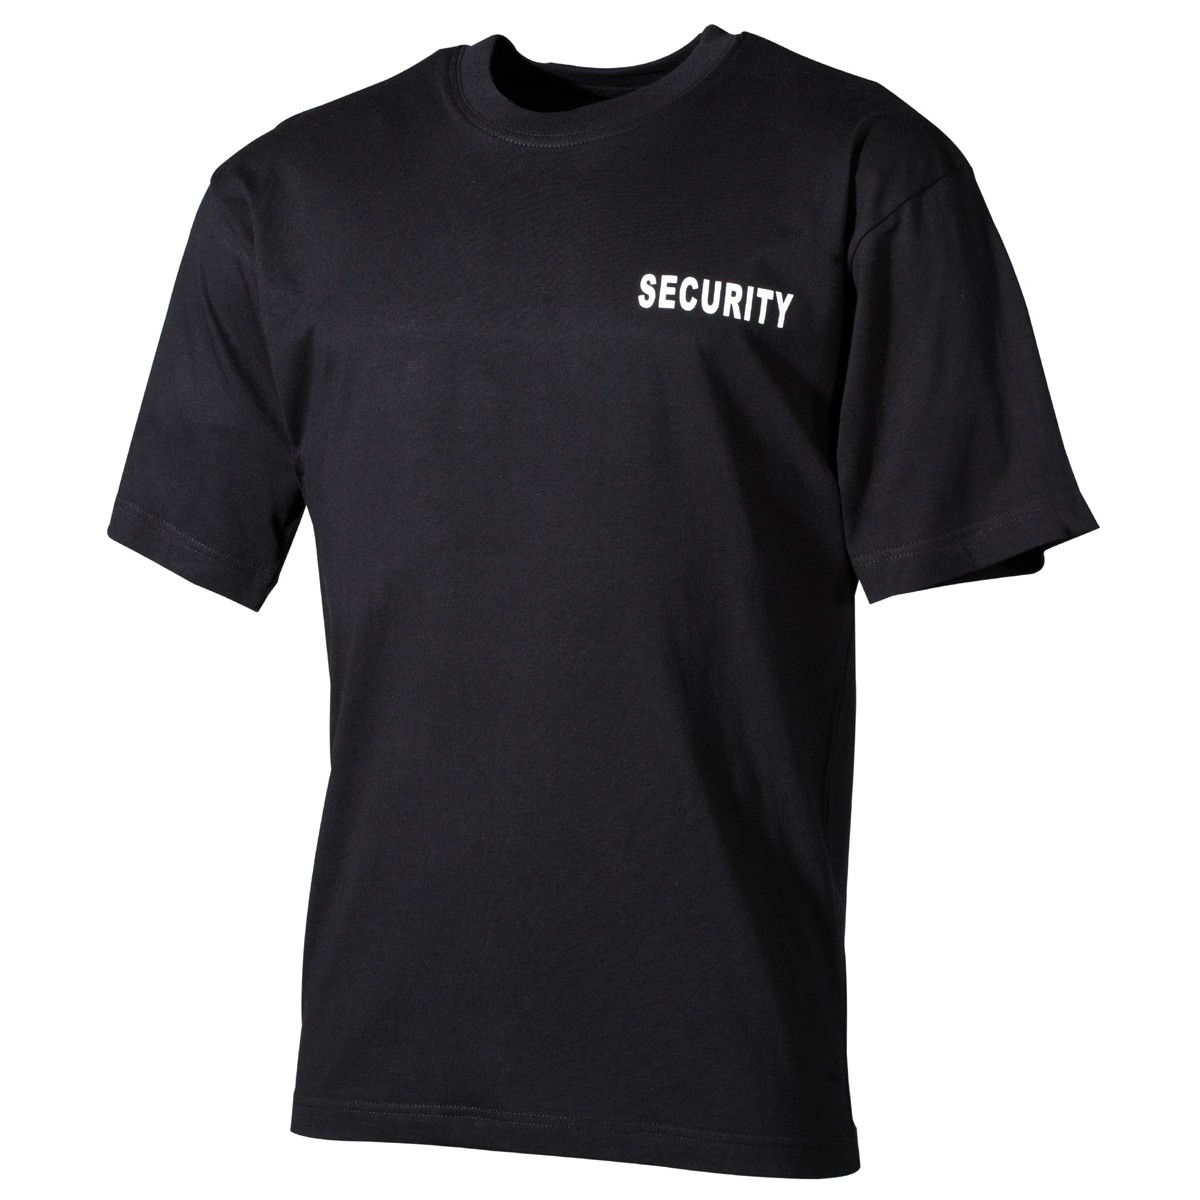 Tričko MFH Security - černé, XL